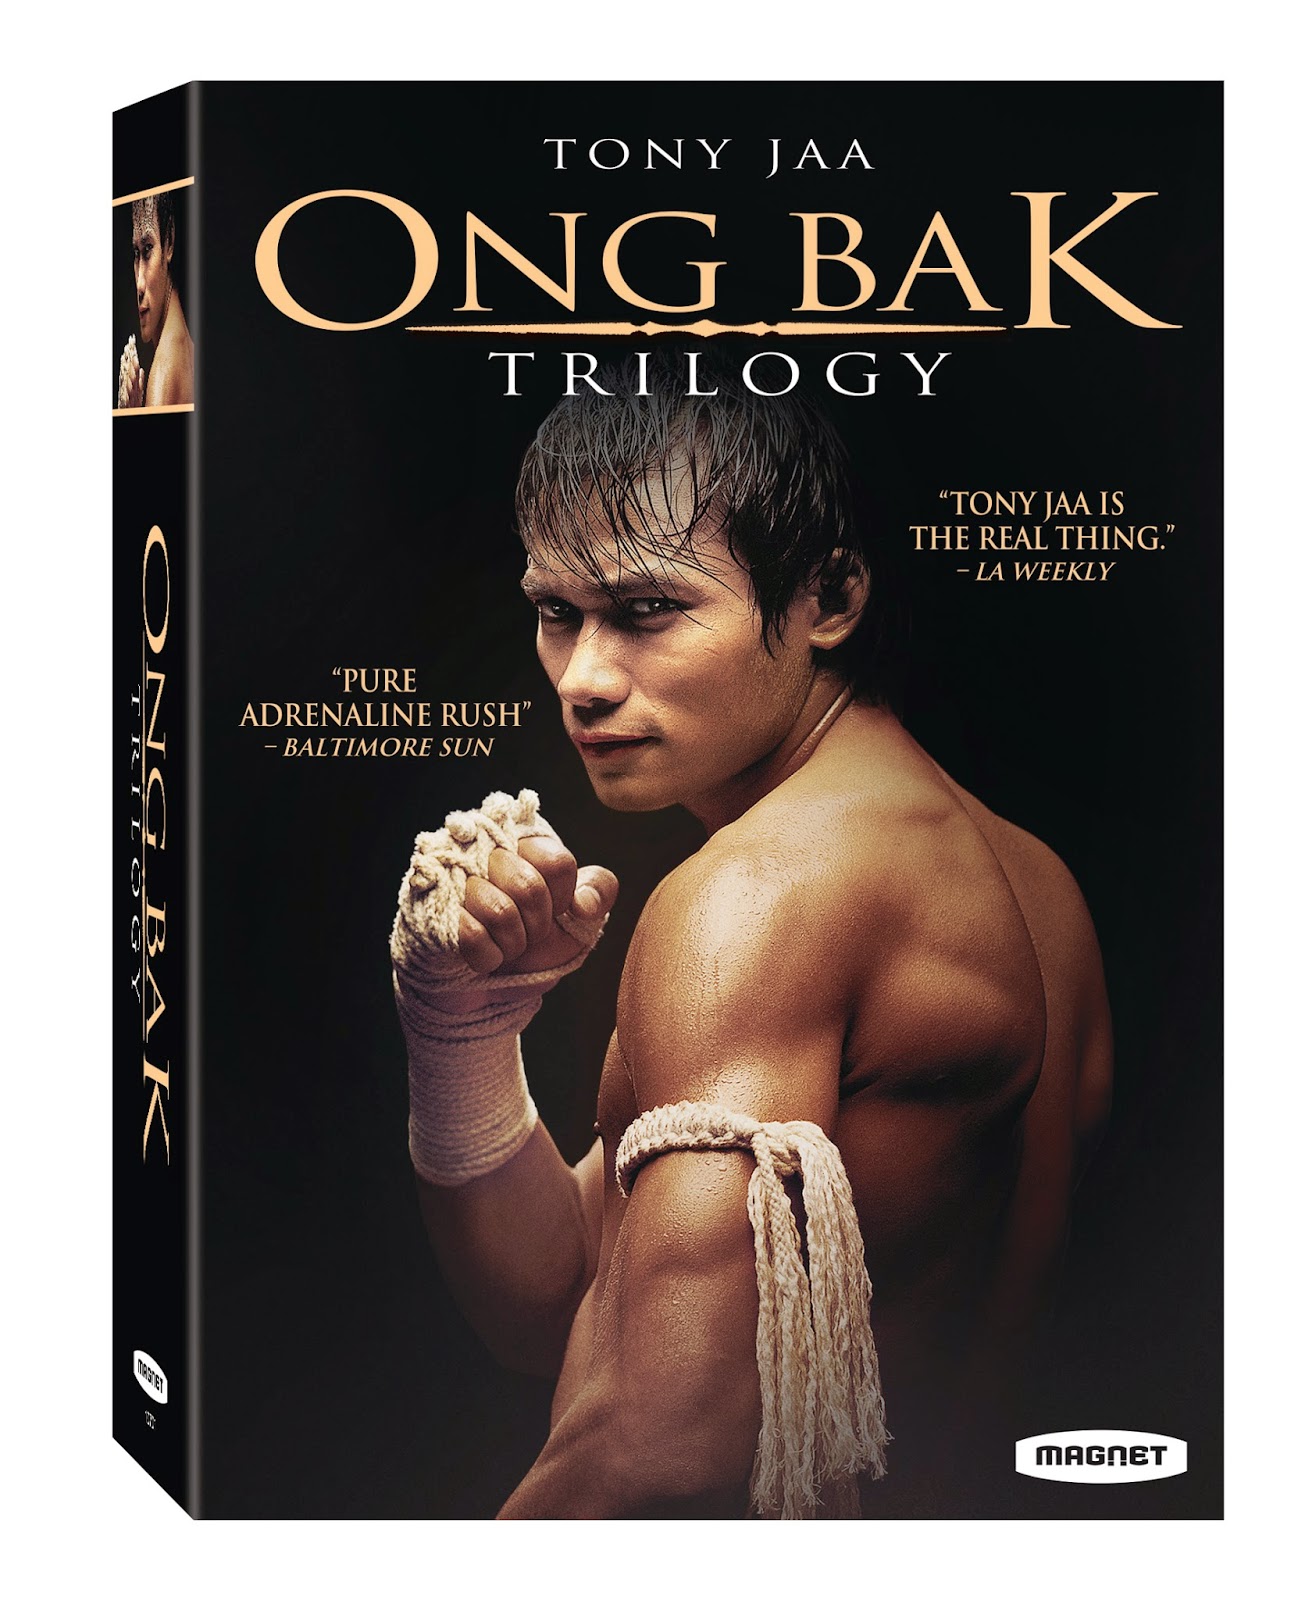 Ong-Bak: The Thai Warrior English Subtitle - YIFY YTS